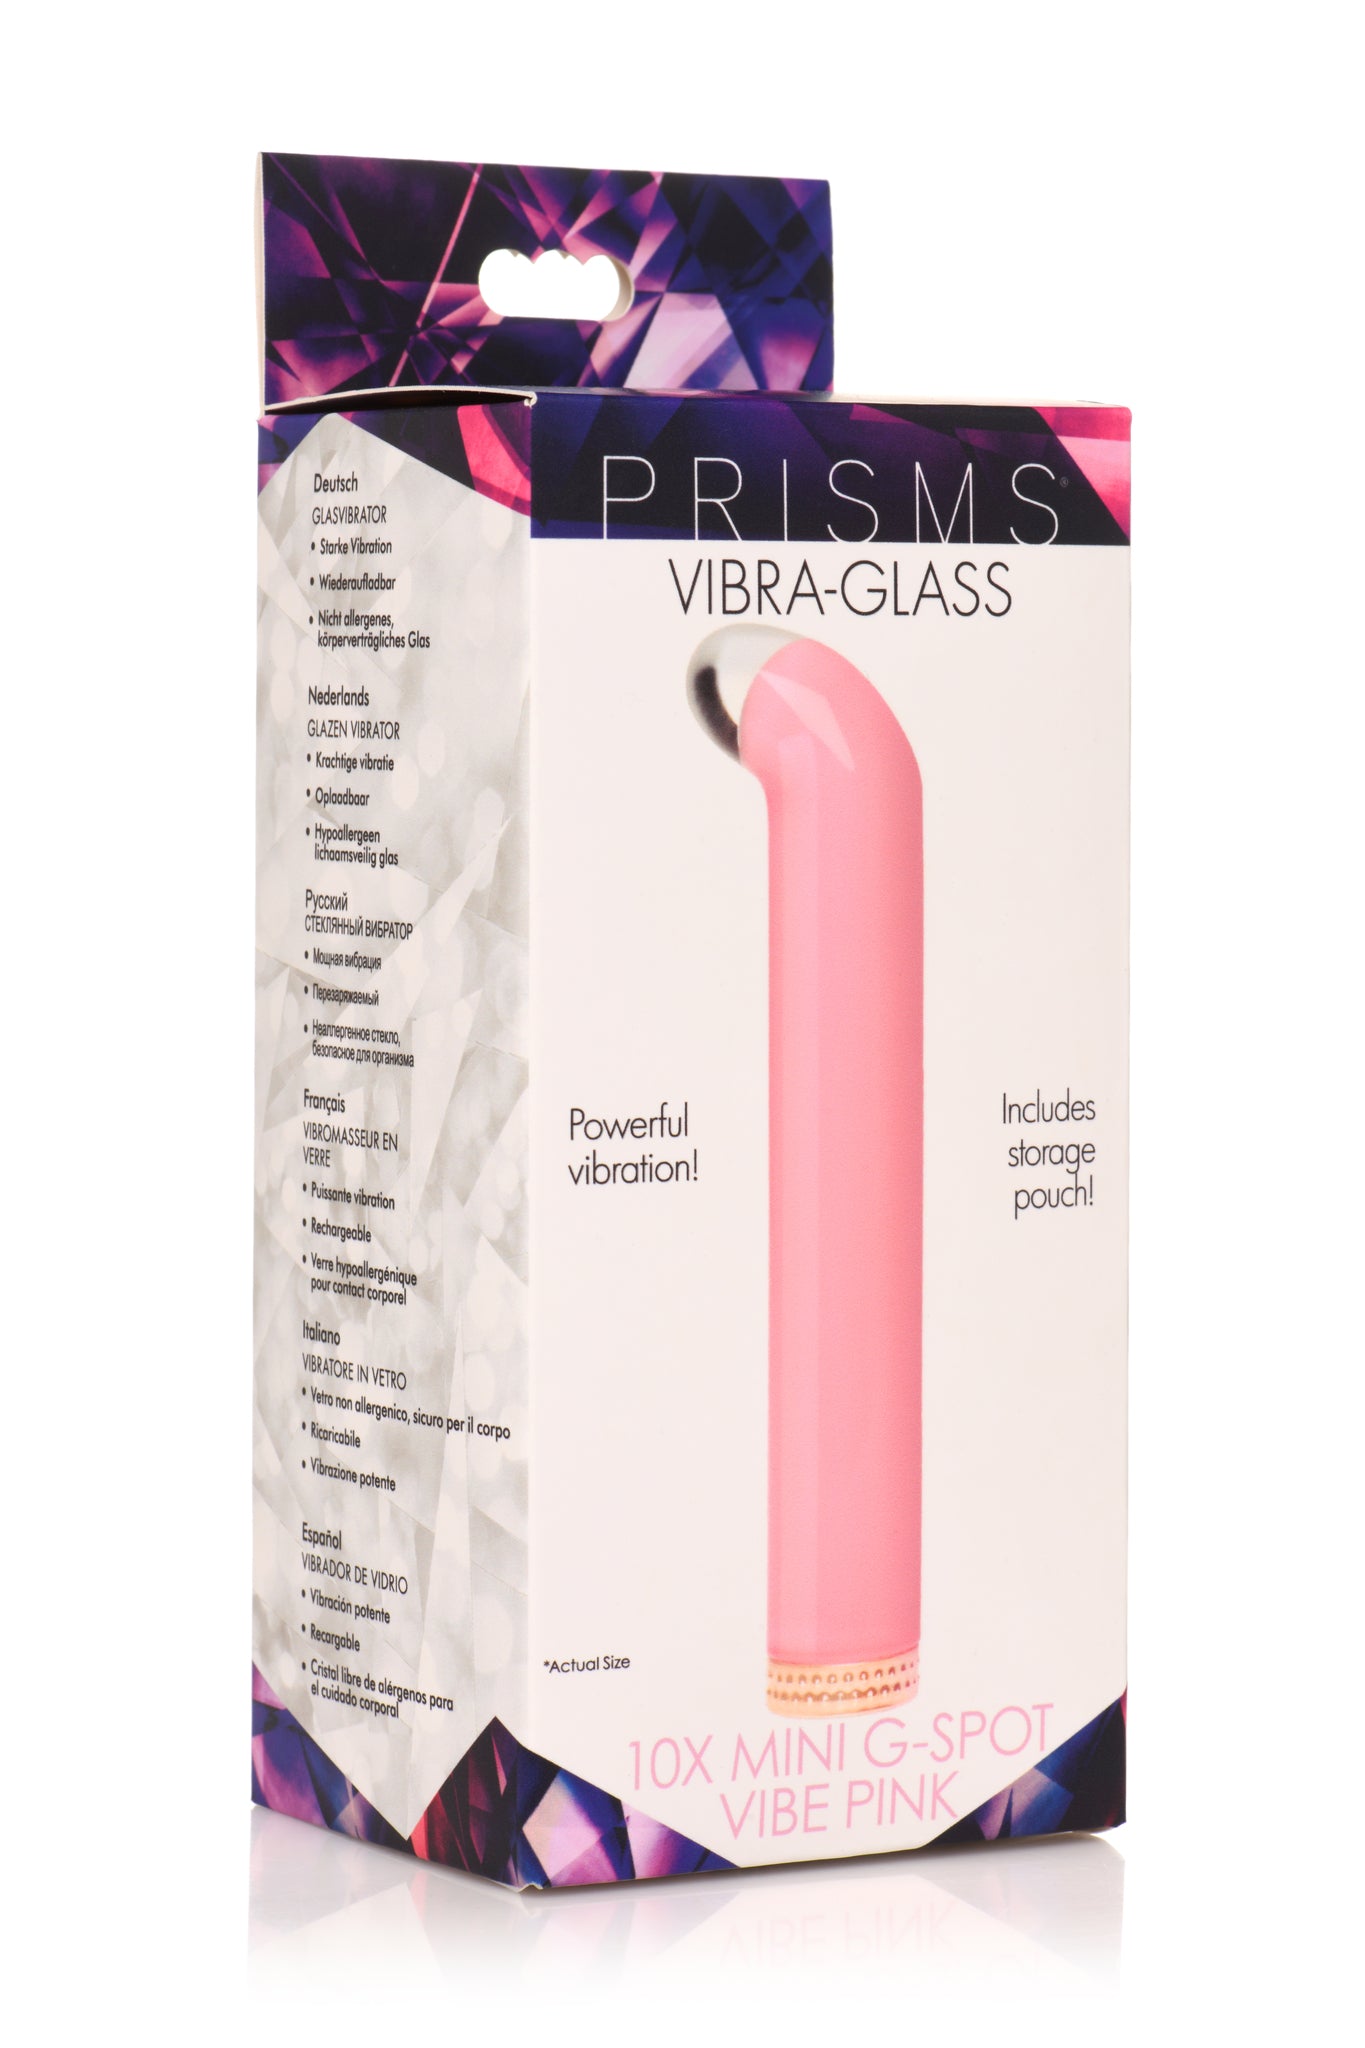 Prisms Vibra-glass 10x G-spot Vibe Pink